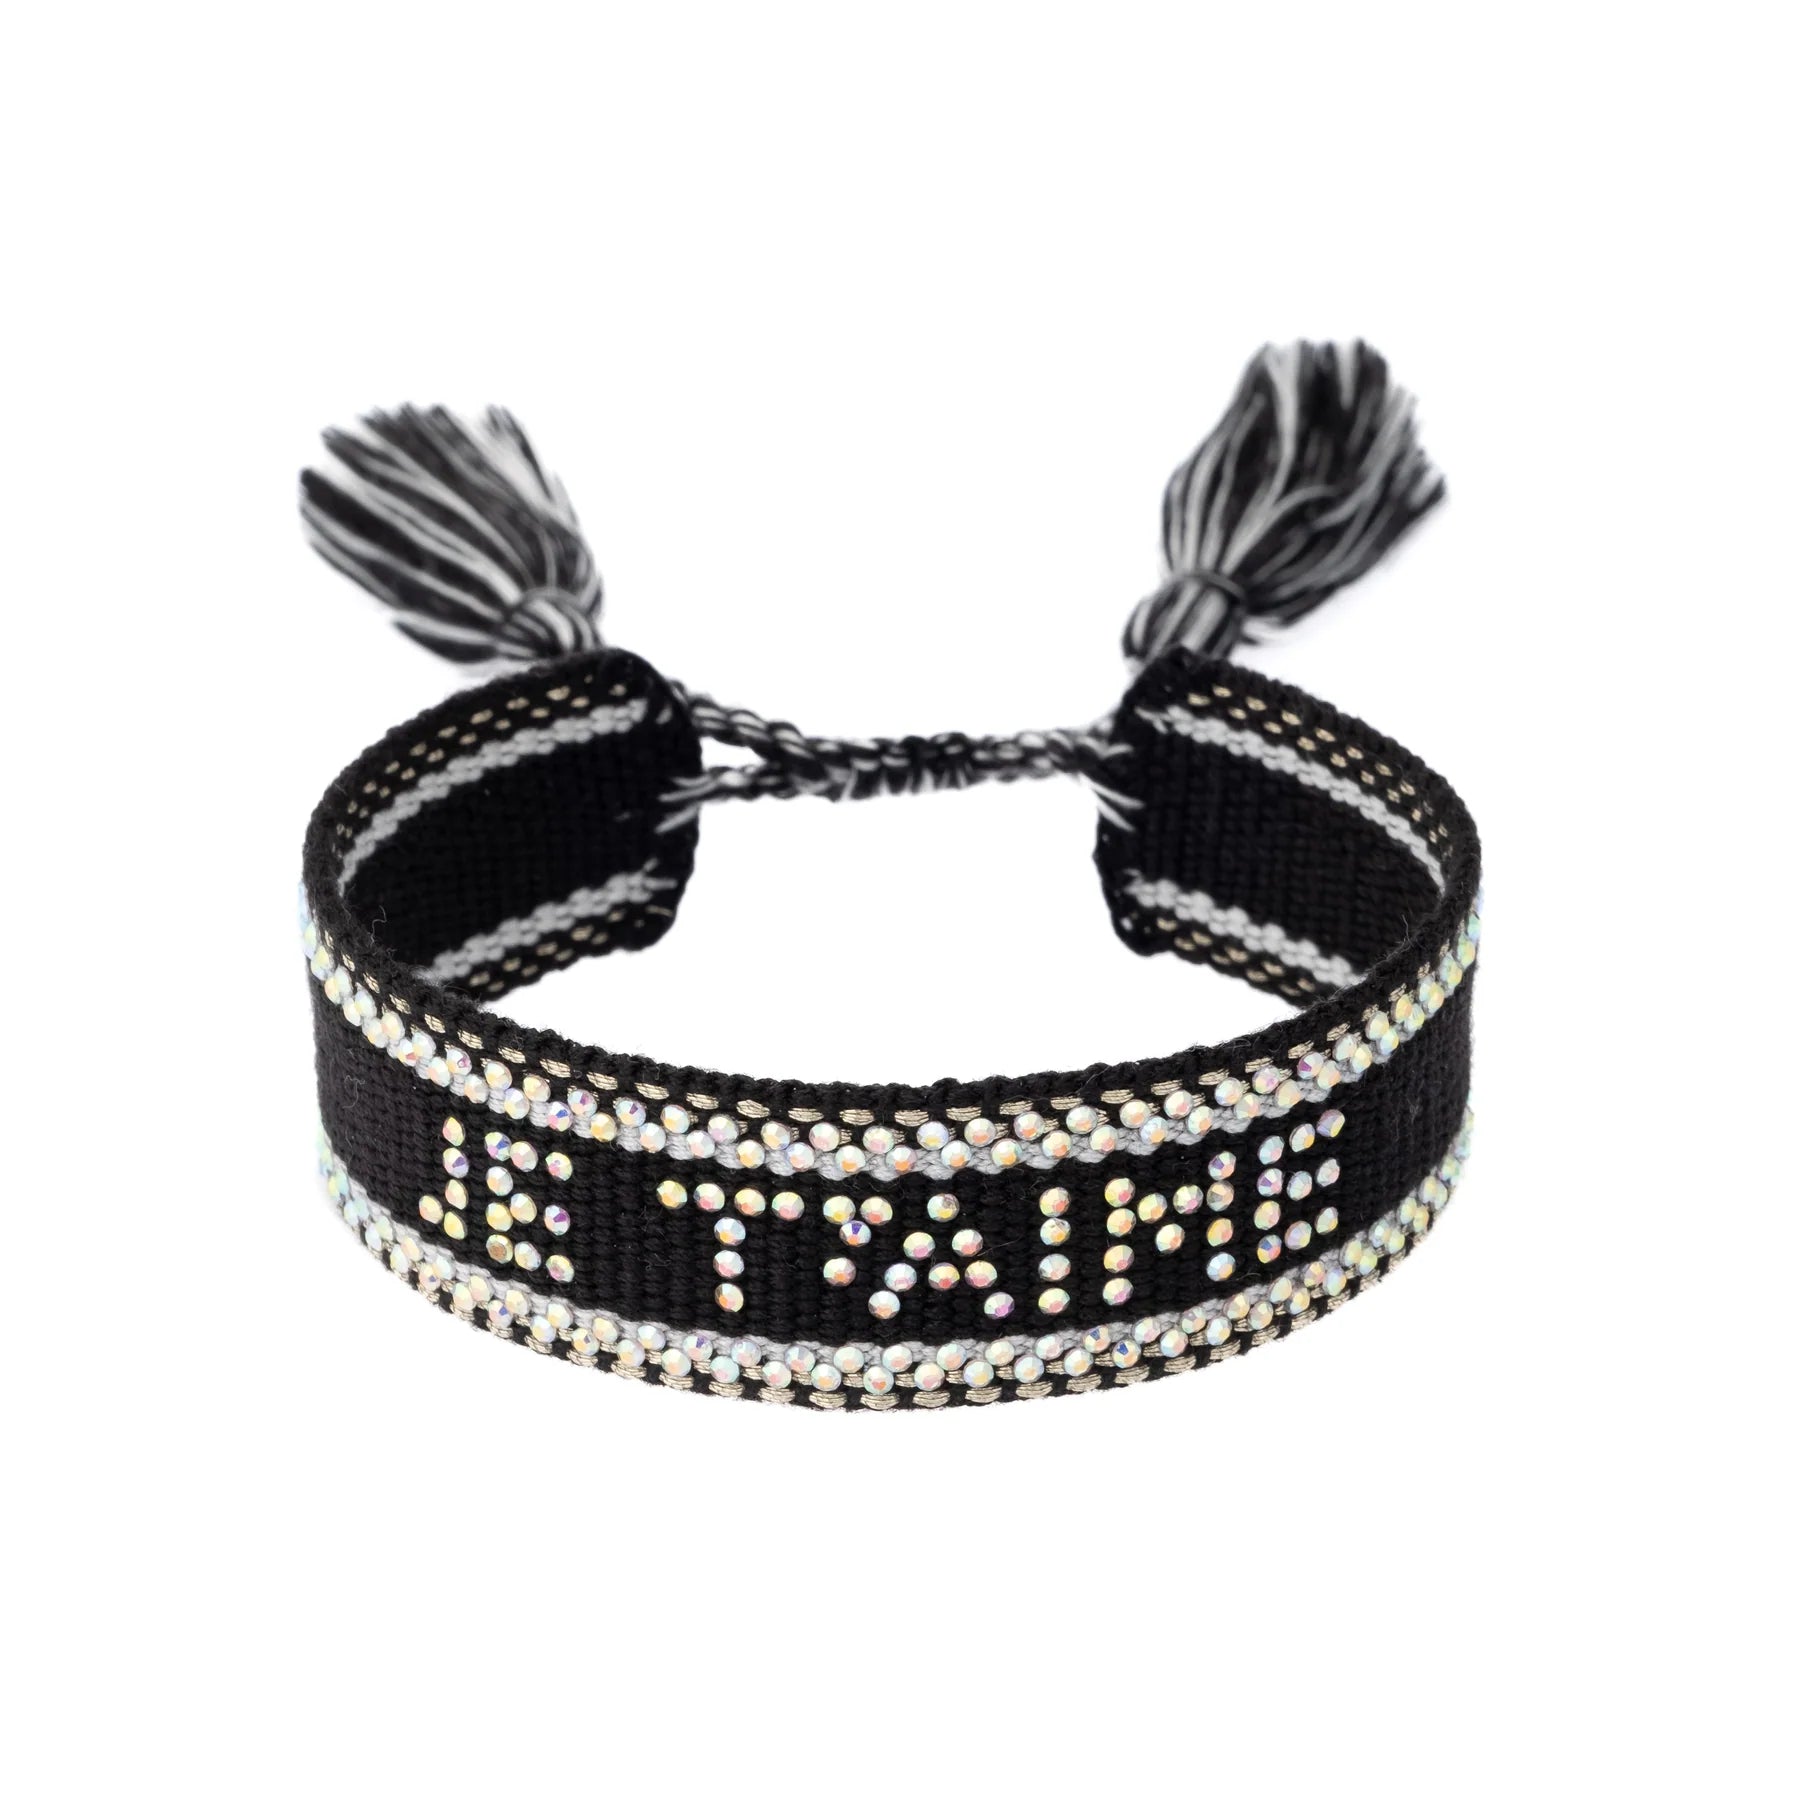 Woven Bracelet w/ Crystals "Je T'aime" Black